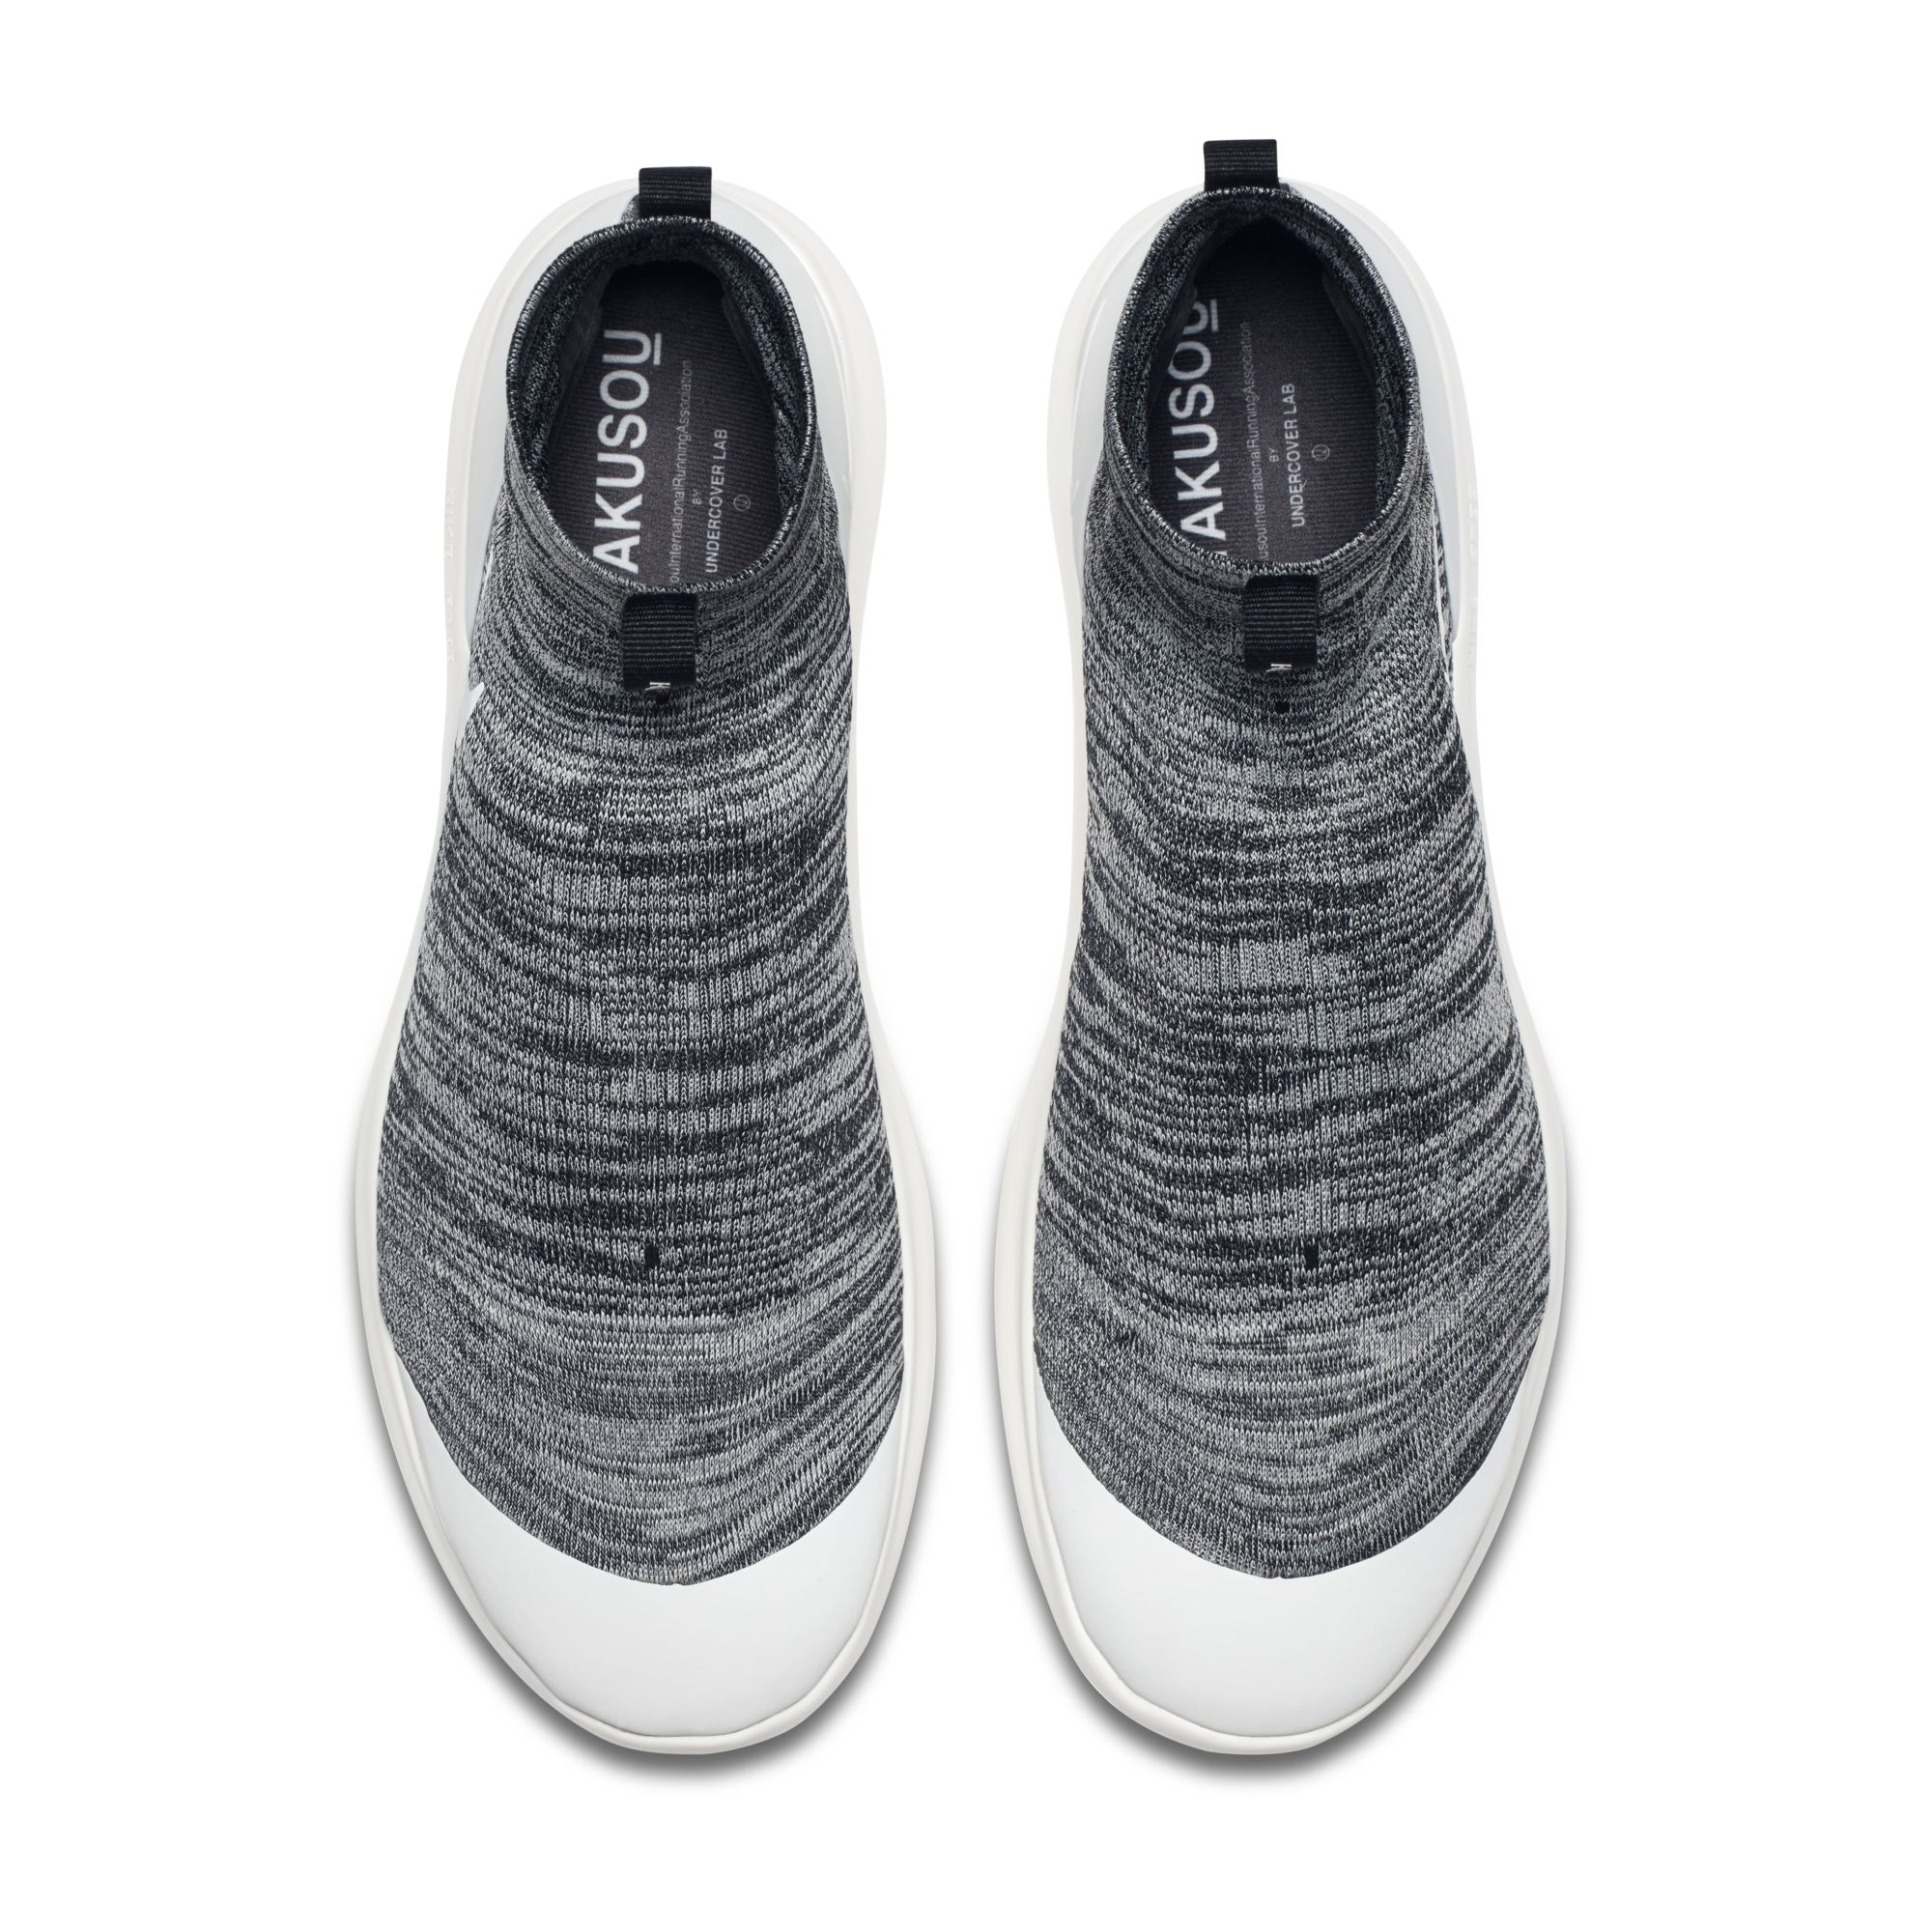 Nike Mercurial Vapor Superfly II FG Silver,soccer cleats Black